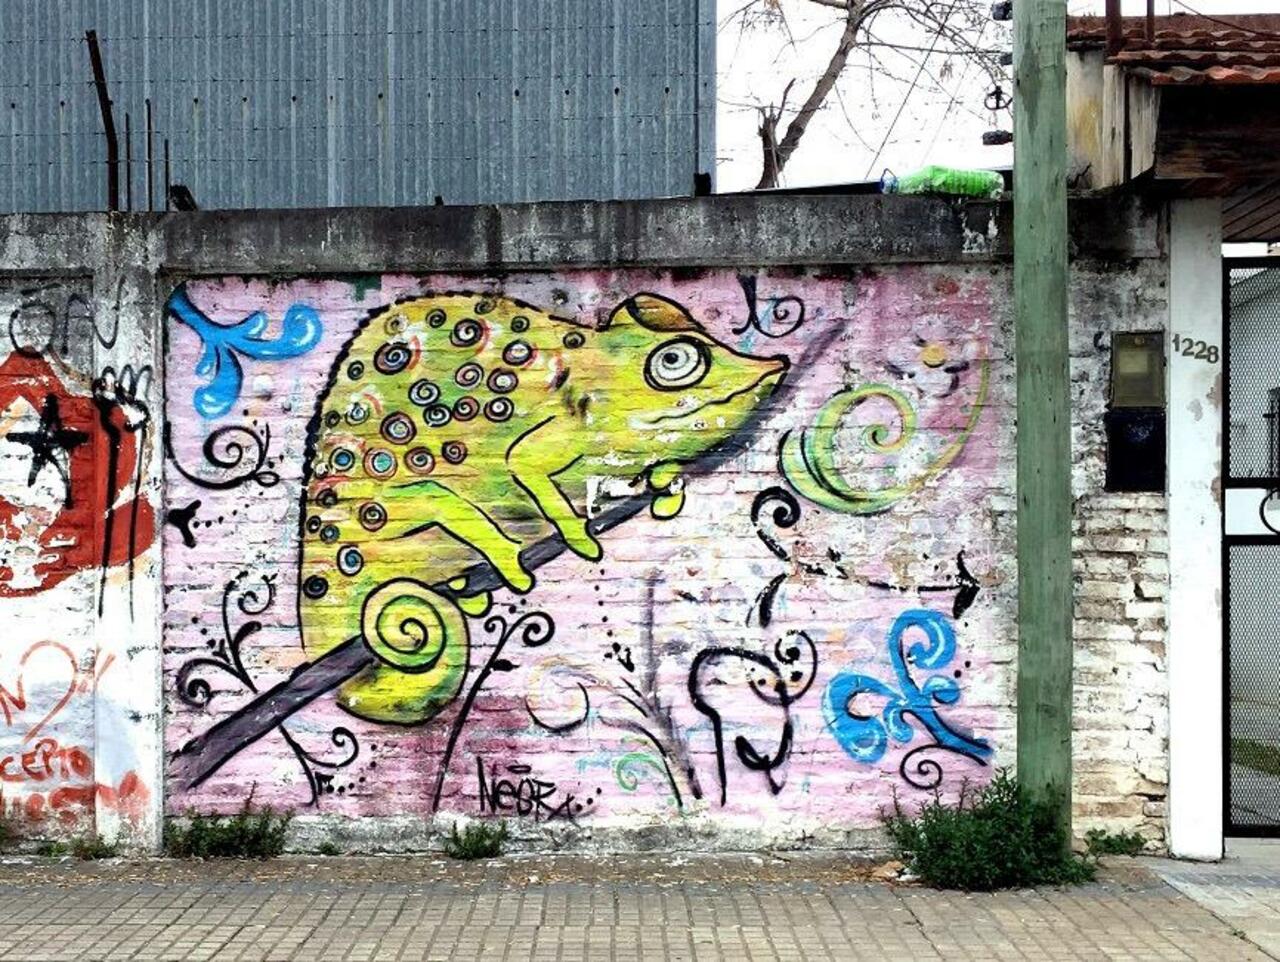 RT @DickieRandrup: #Graffiti de hoy: << Yellow iguana >> calle 45 19y20 #LaPlata #Argentina #StreetArt #UrbanArt #ArteUrbano http://t.co/DNORKxHexf